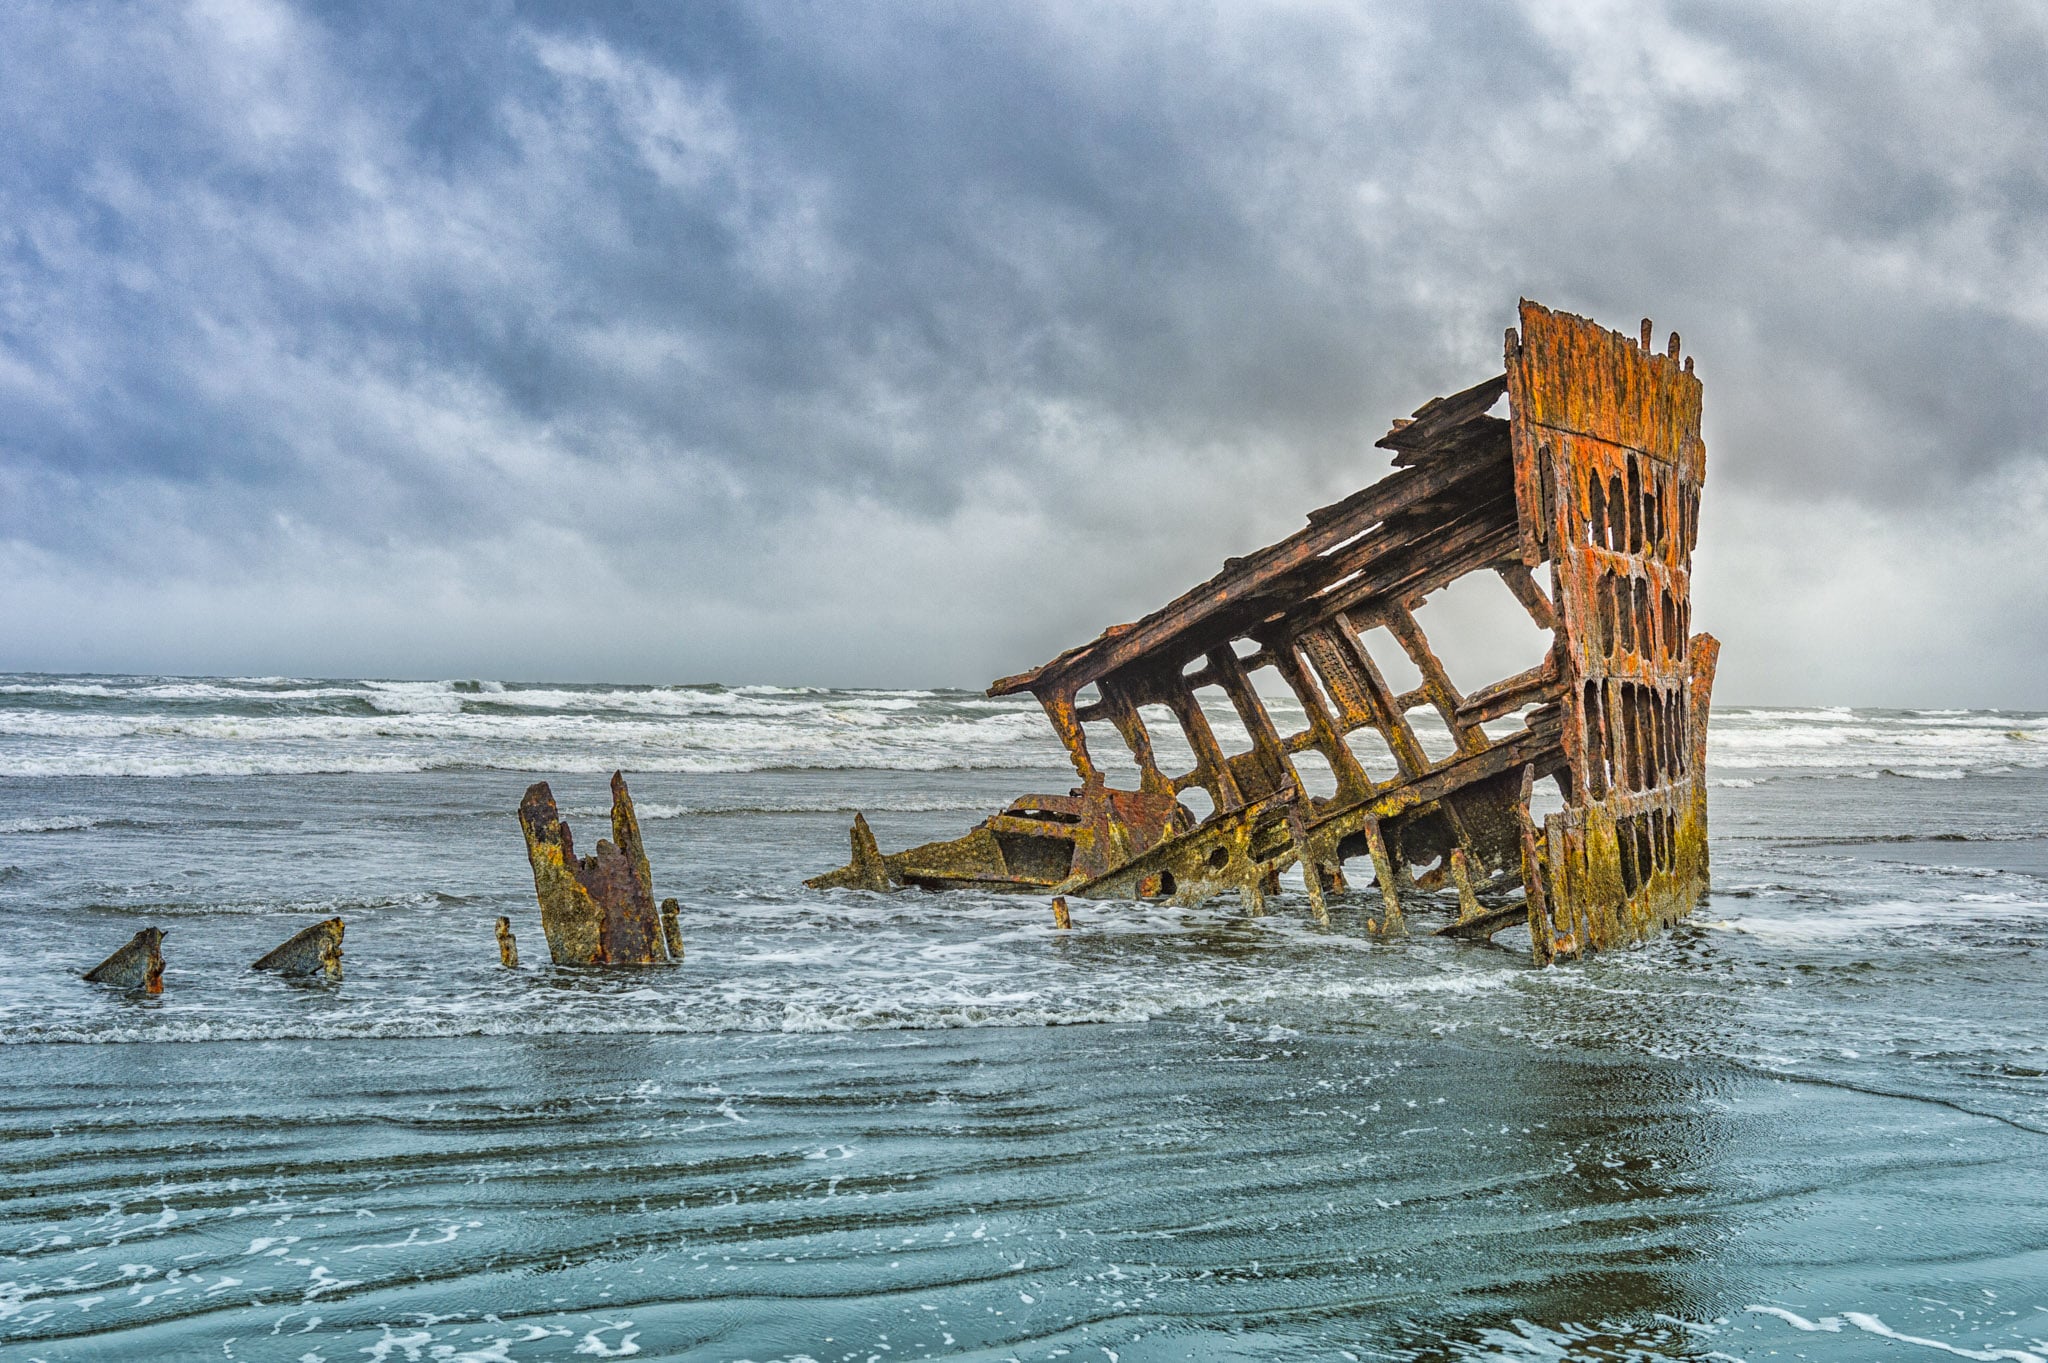 Peter Iredale Shipwreck - Oregon's Pacific coast